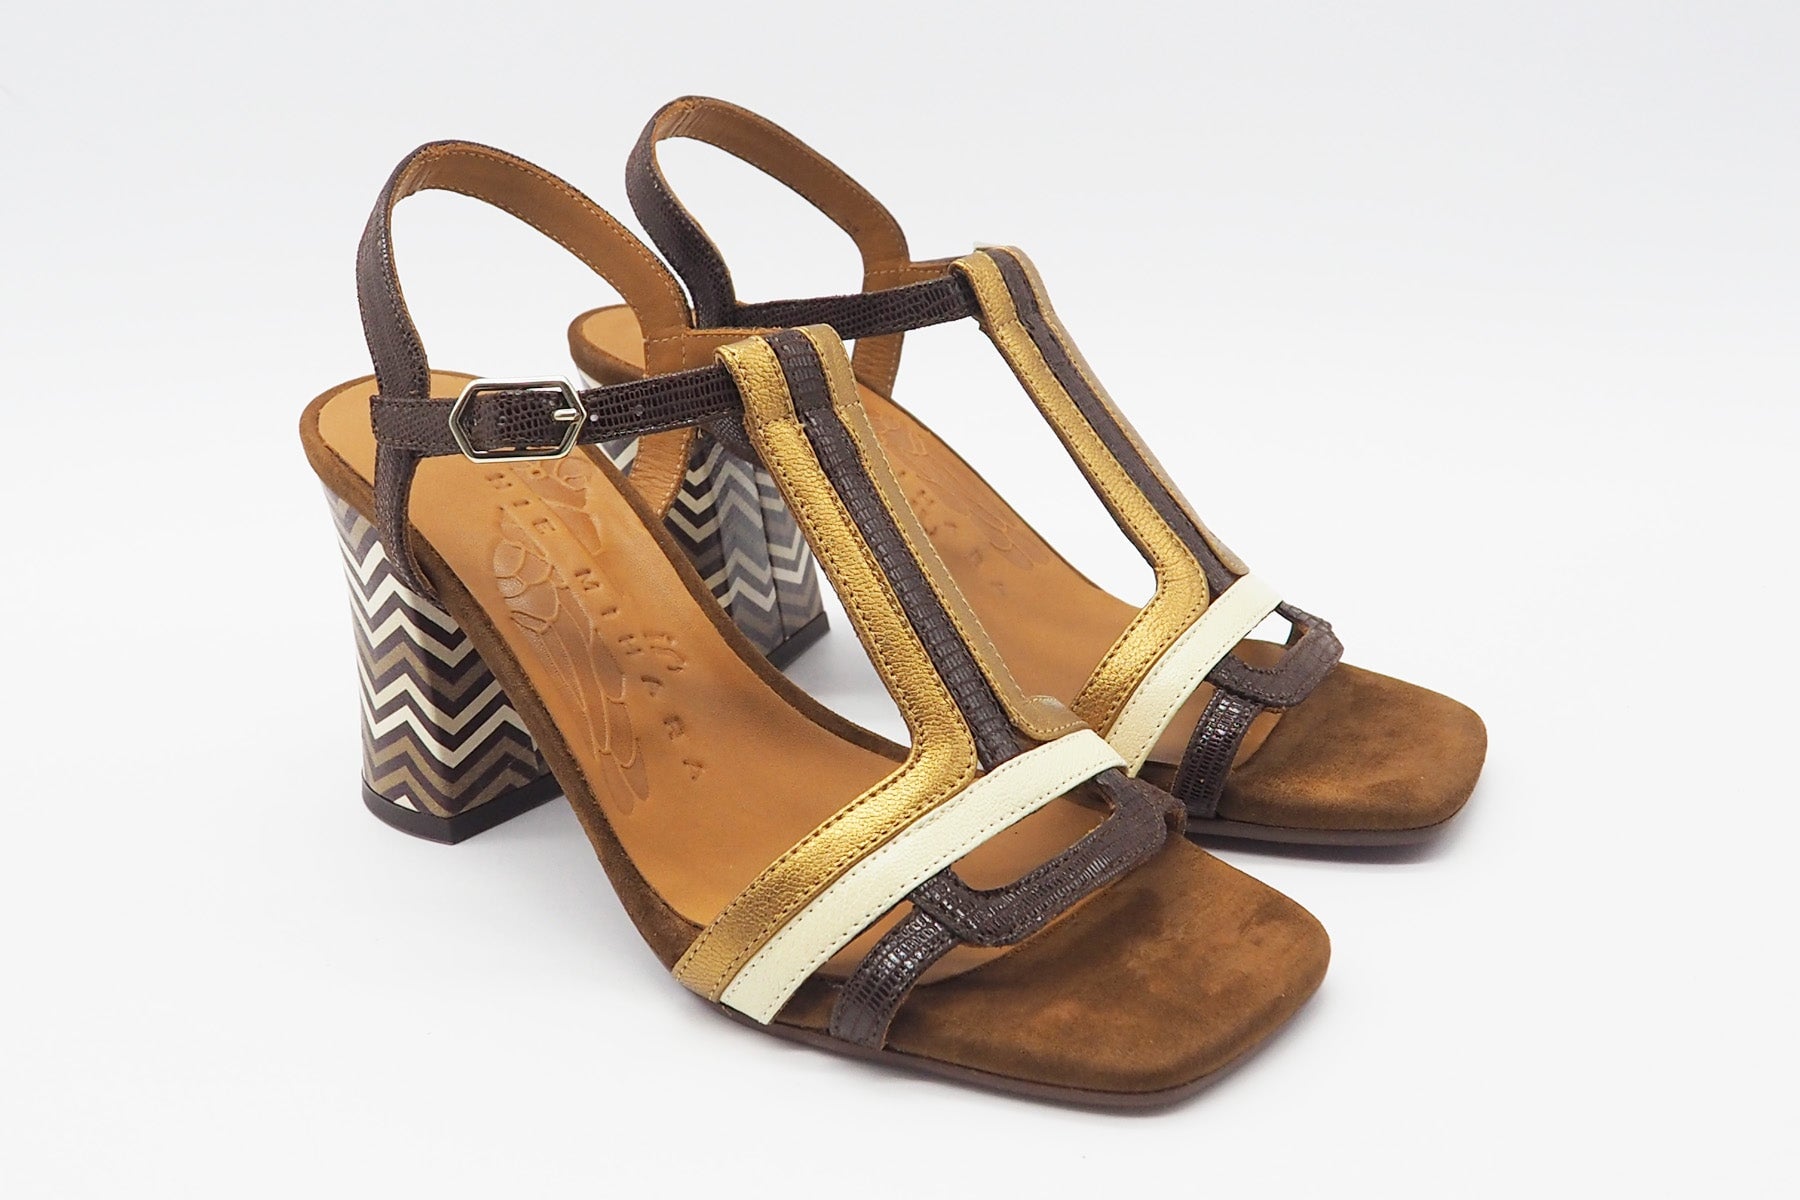 Damen Sandale aus geprägtem Leder, Leder & Metallicleder in Brauntönen - Absatz 8cm Damen Sandalen Chie Mihara 